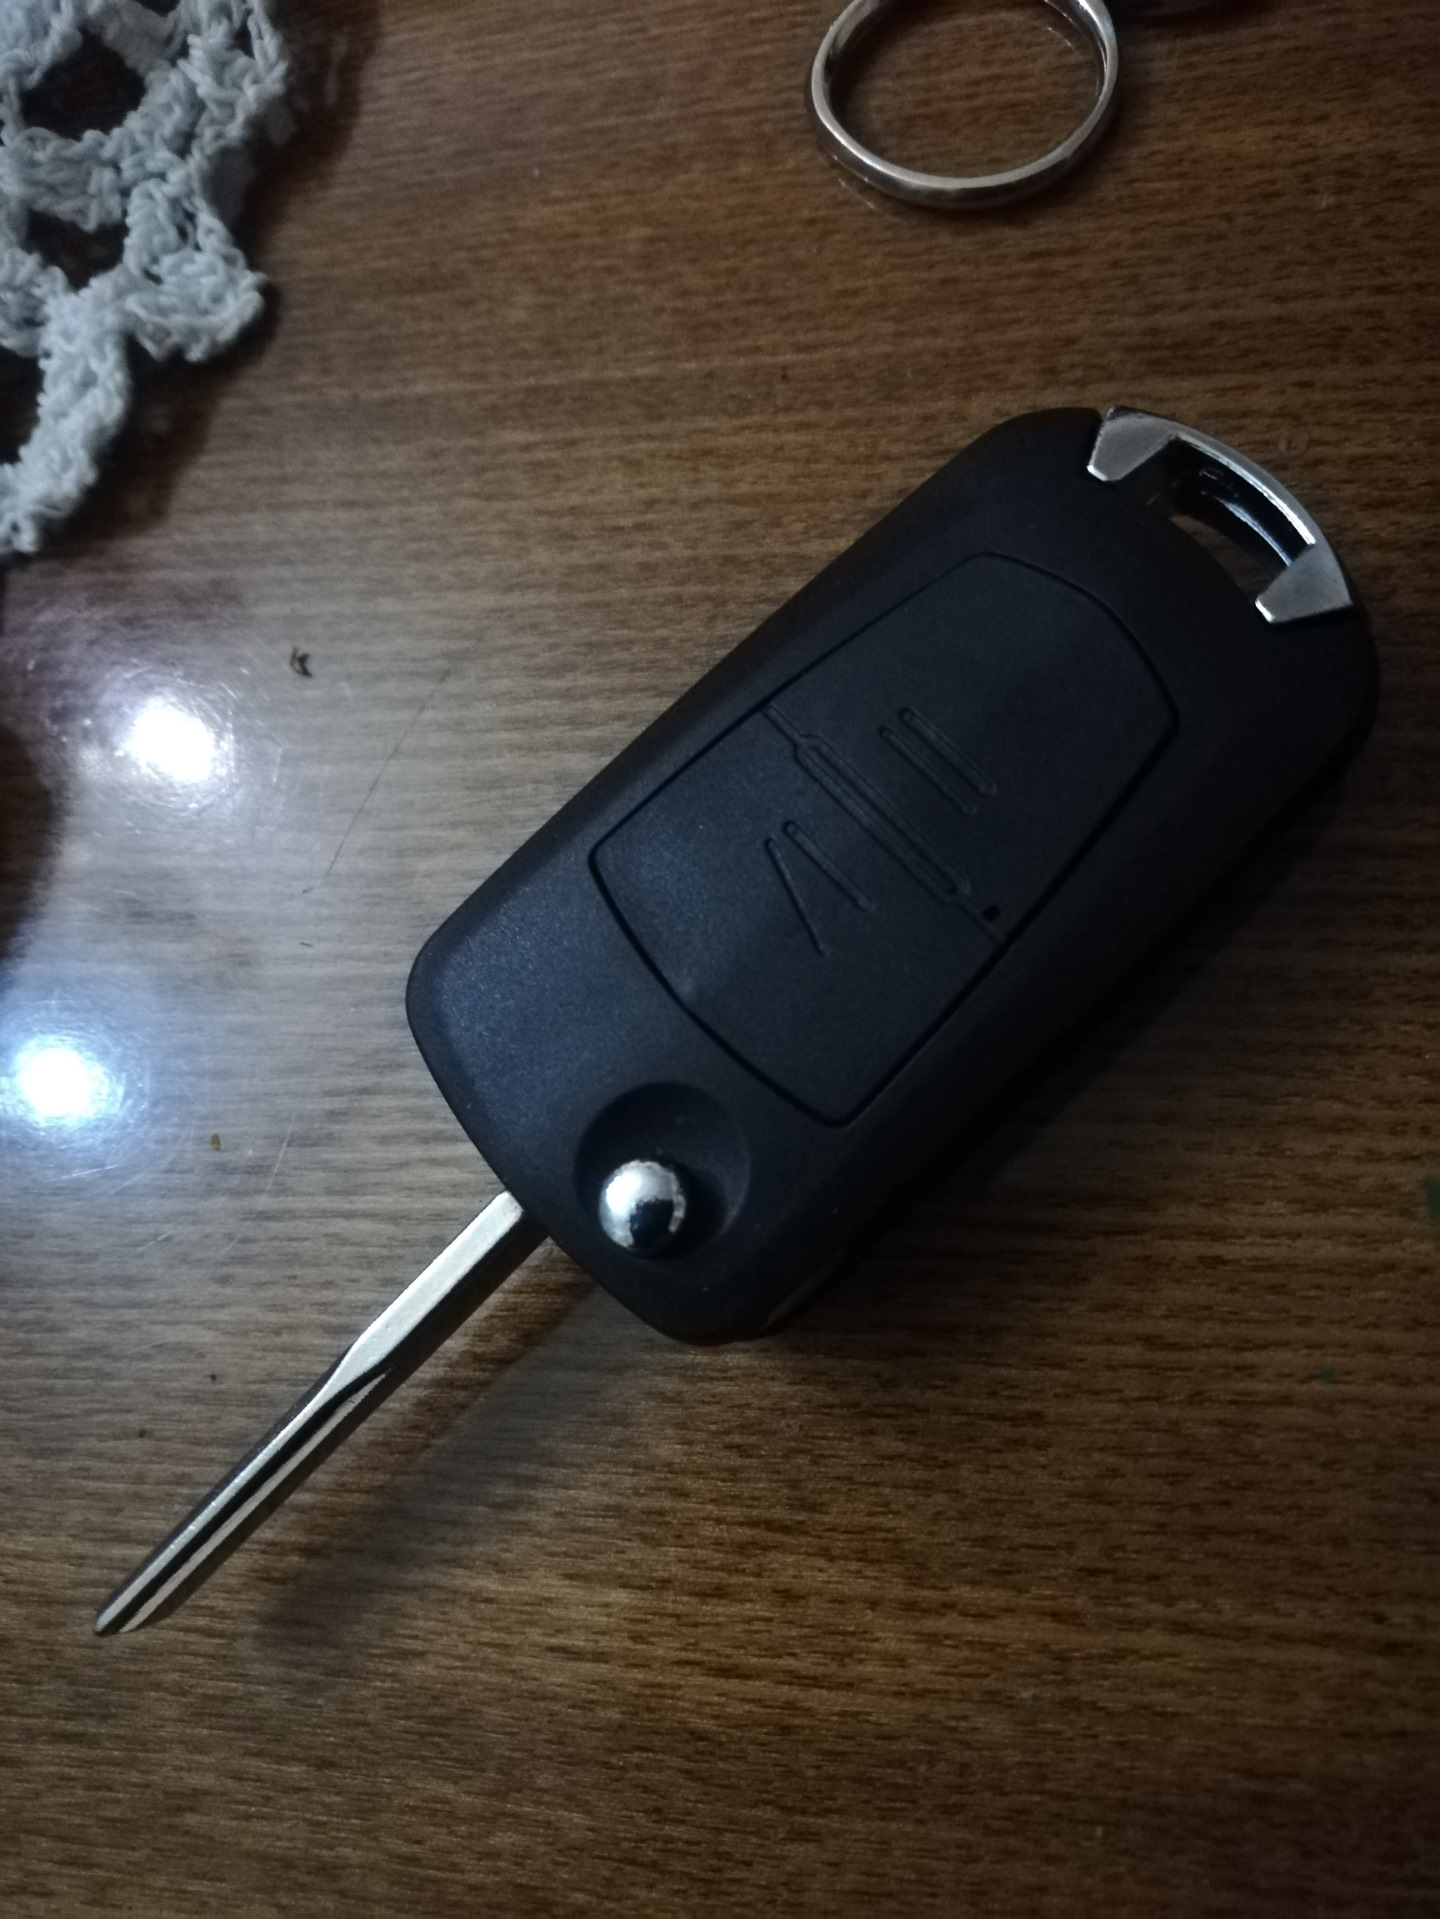 Ключ вектра б. Ключ Опель Вектра с. Opel Vectra a ключ. Ключ Опель Вектра б. Выкидной ключ Опель Вектра с.